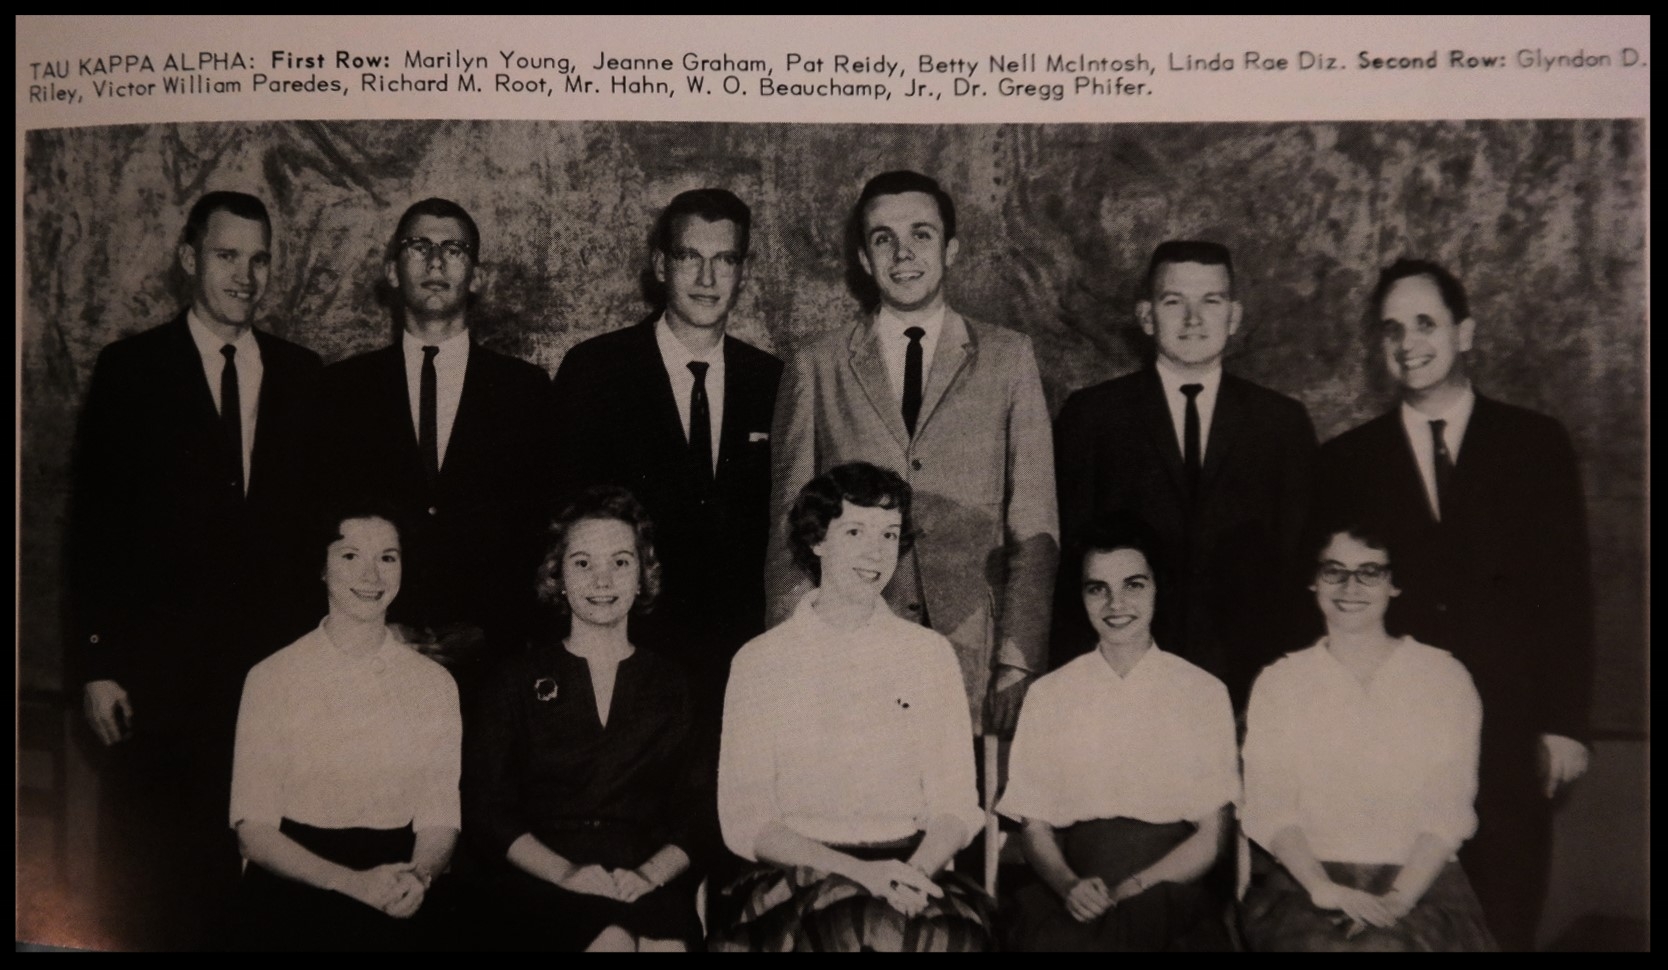 1961 - 1962 Tau Kappa Alpha Honorary